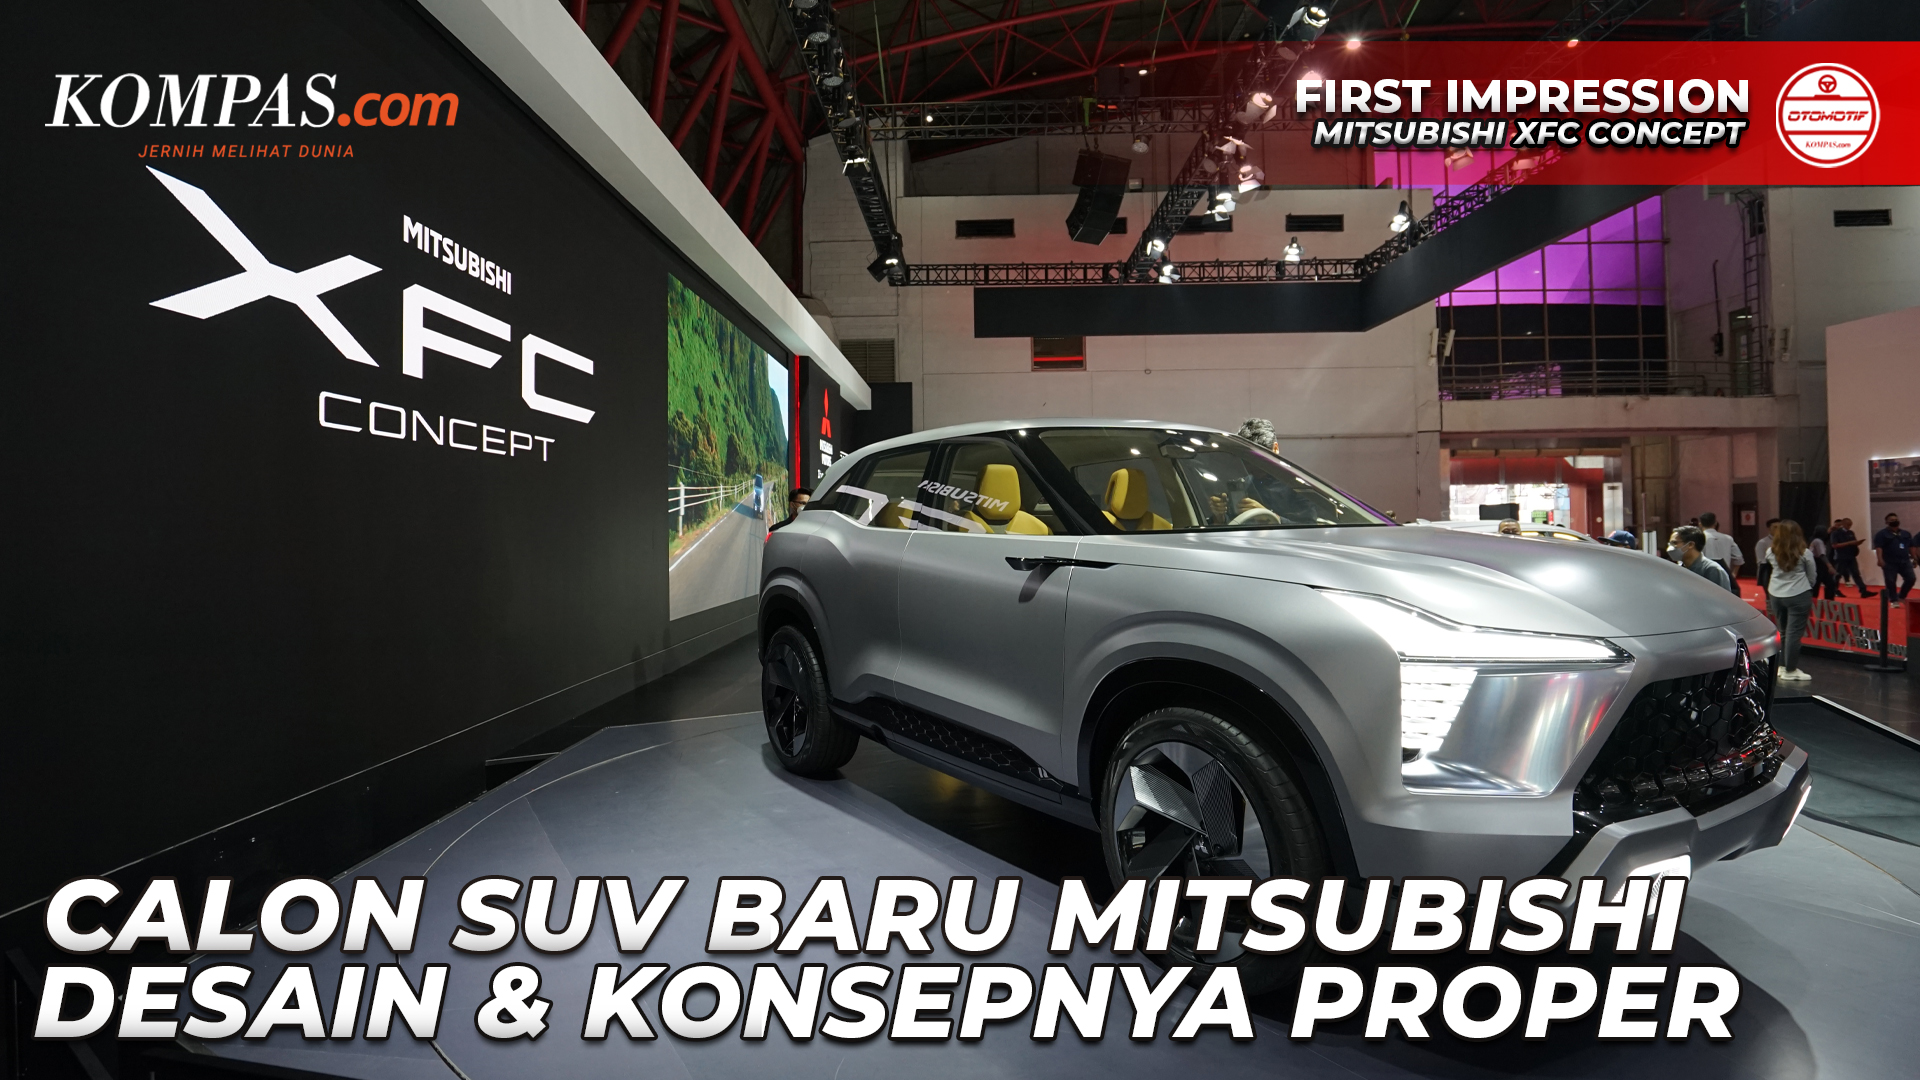 FIRST IMPRESSION | Mitsubishi XFC Concept | Calon SUV Baru Mitsubishi Desain & Konsepnya Proper